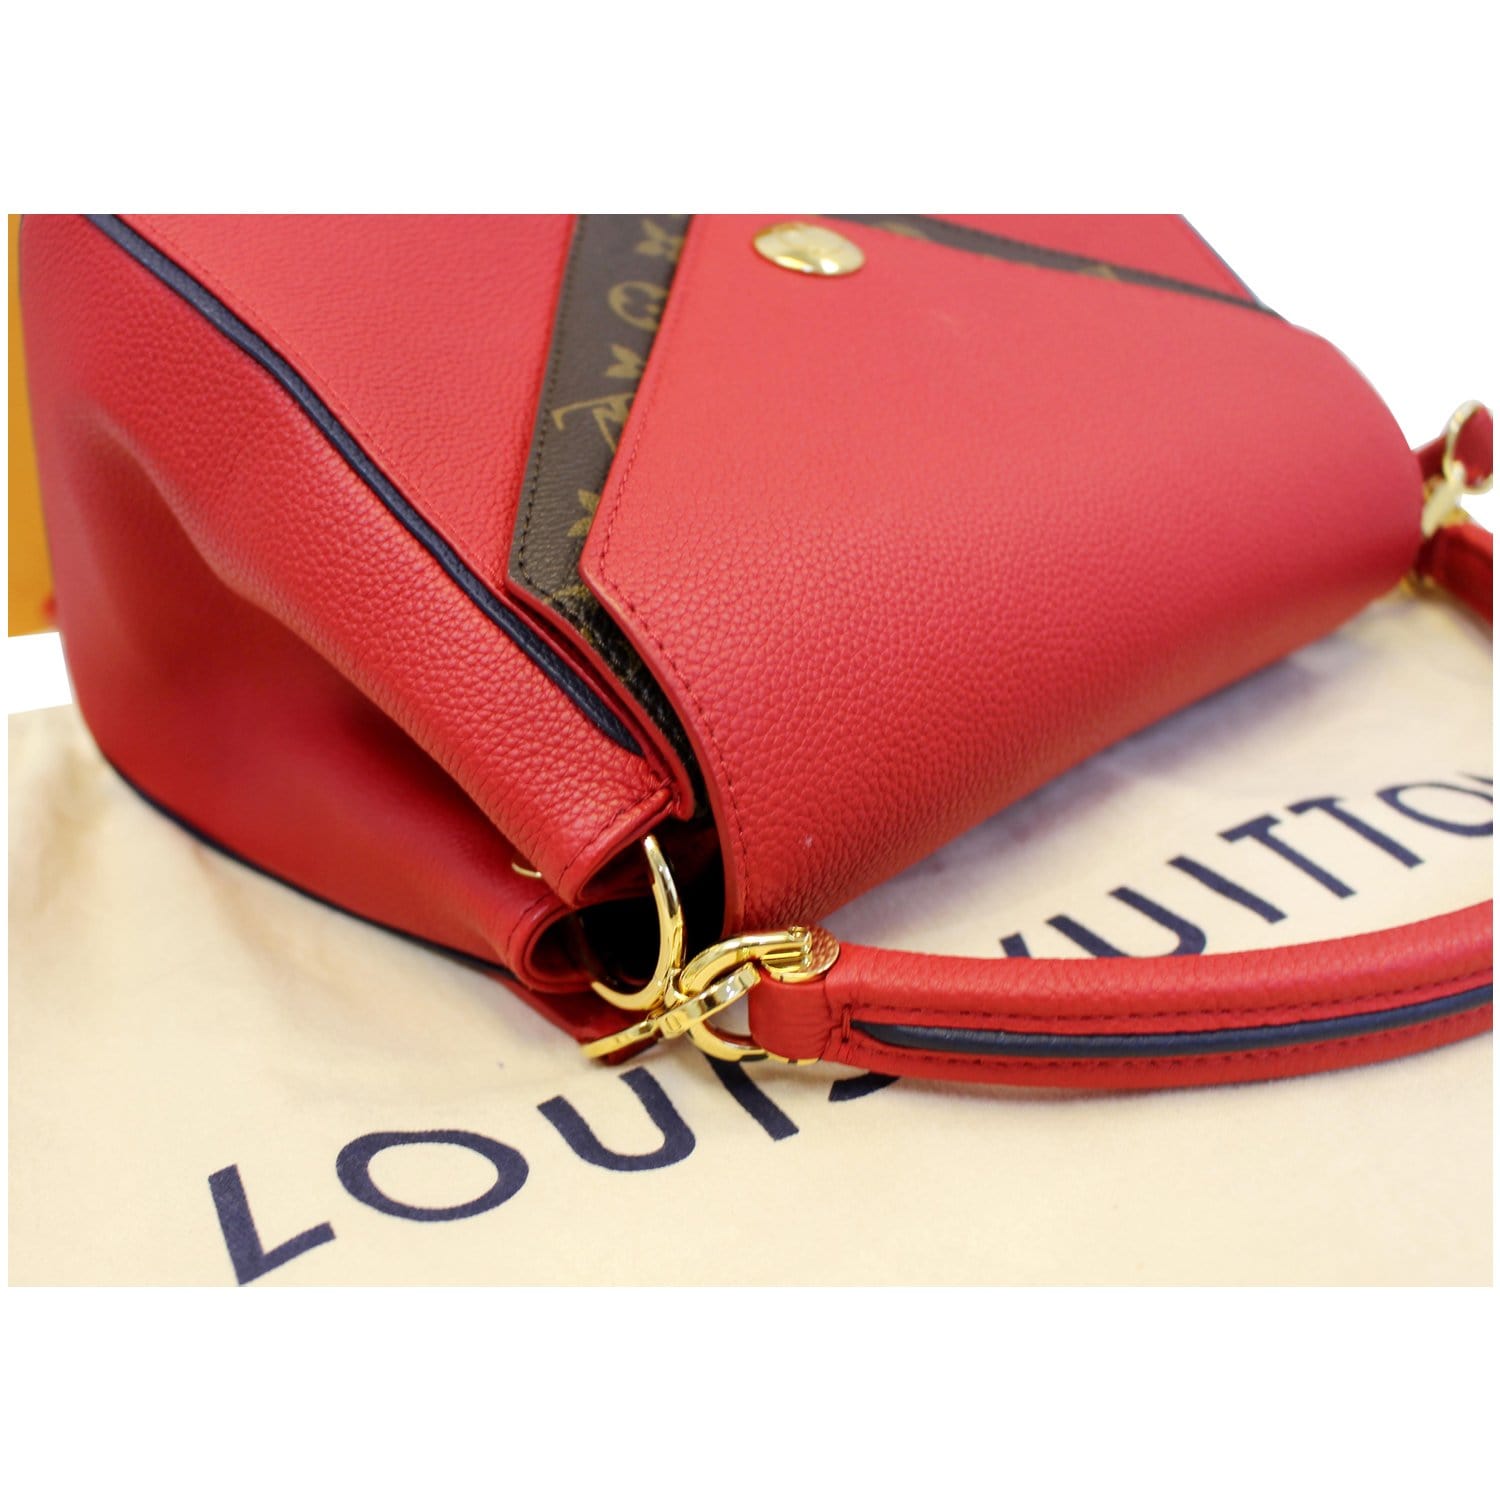 PAID LISTING Name: Louis Vuitton Double V Monogram Condition: 8/10